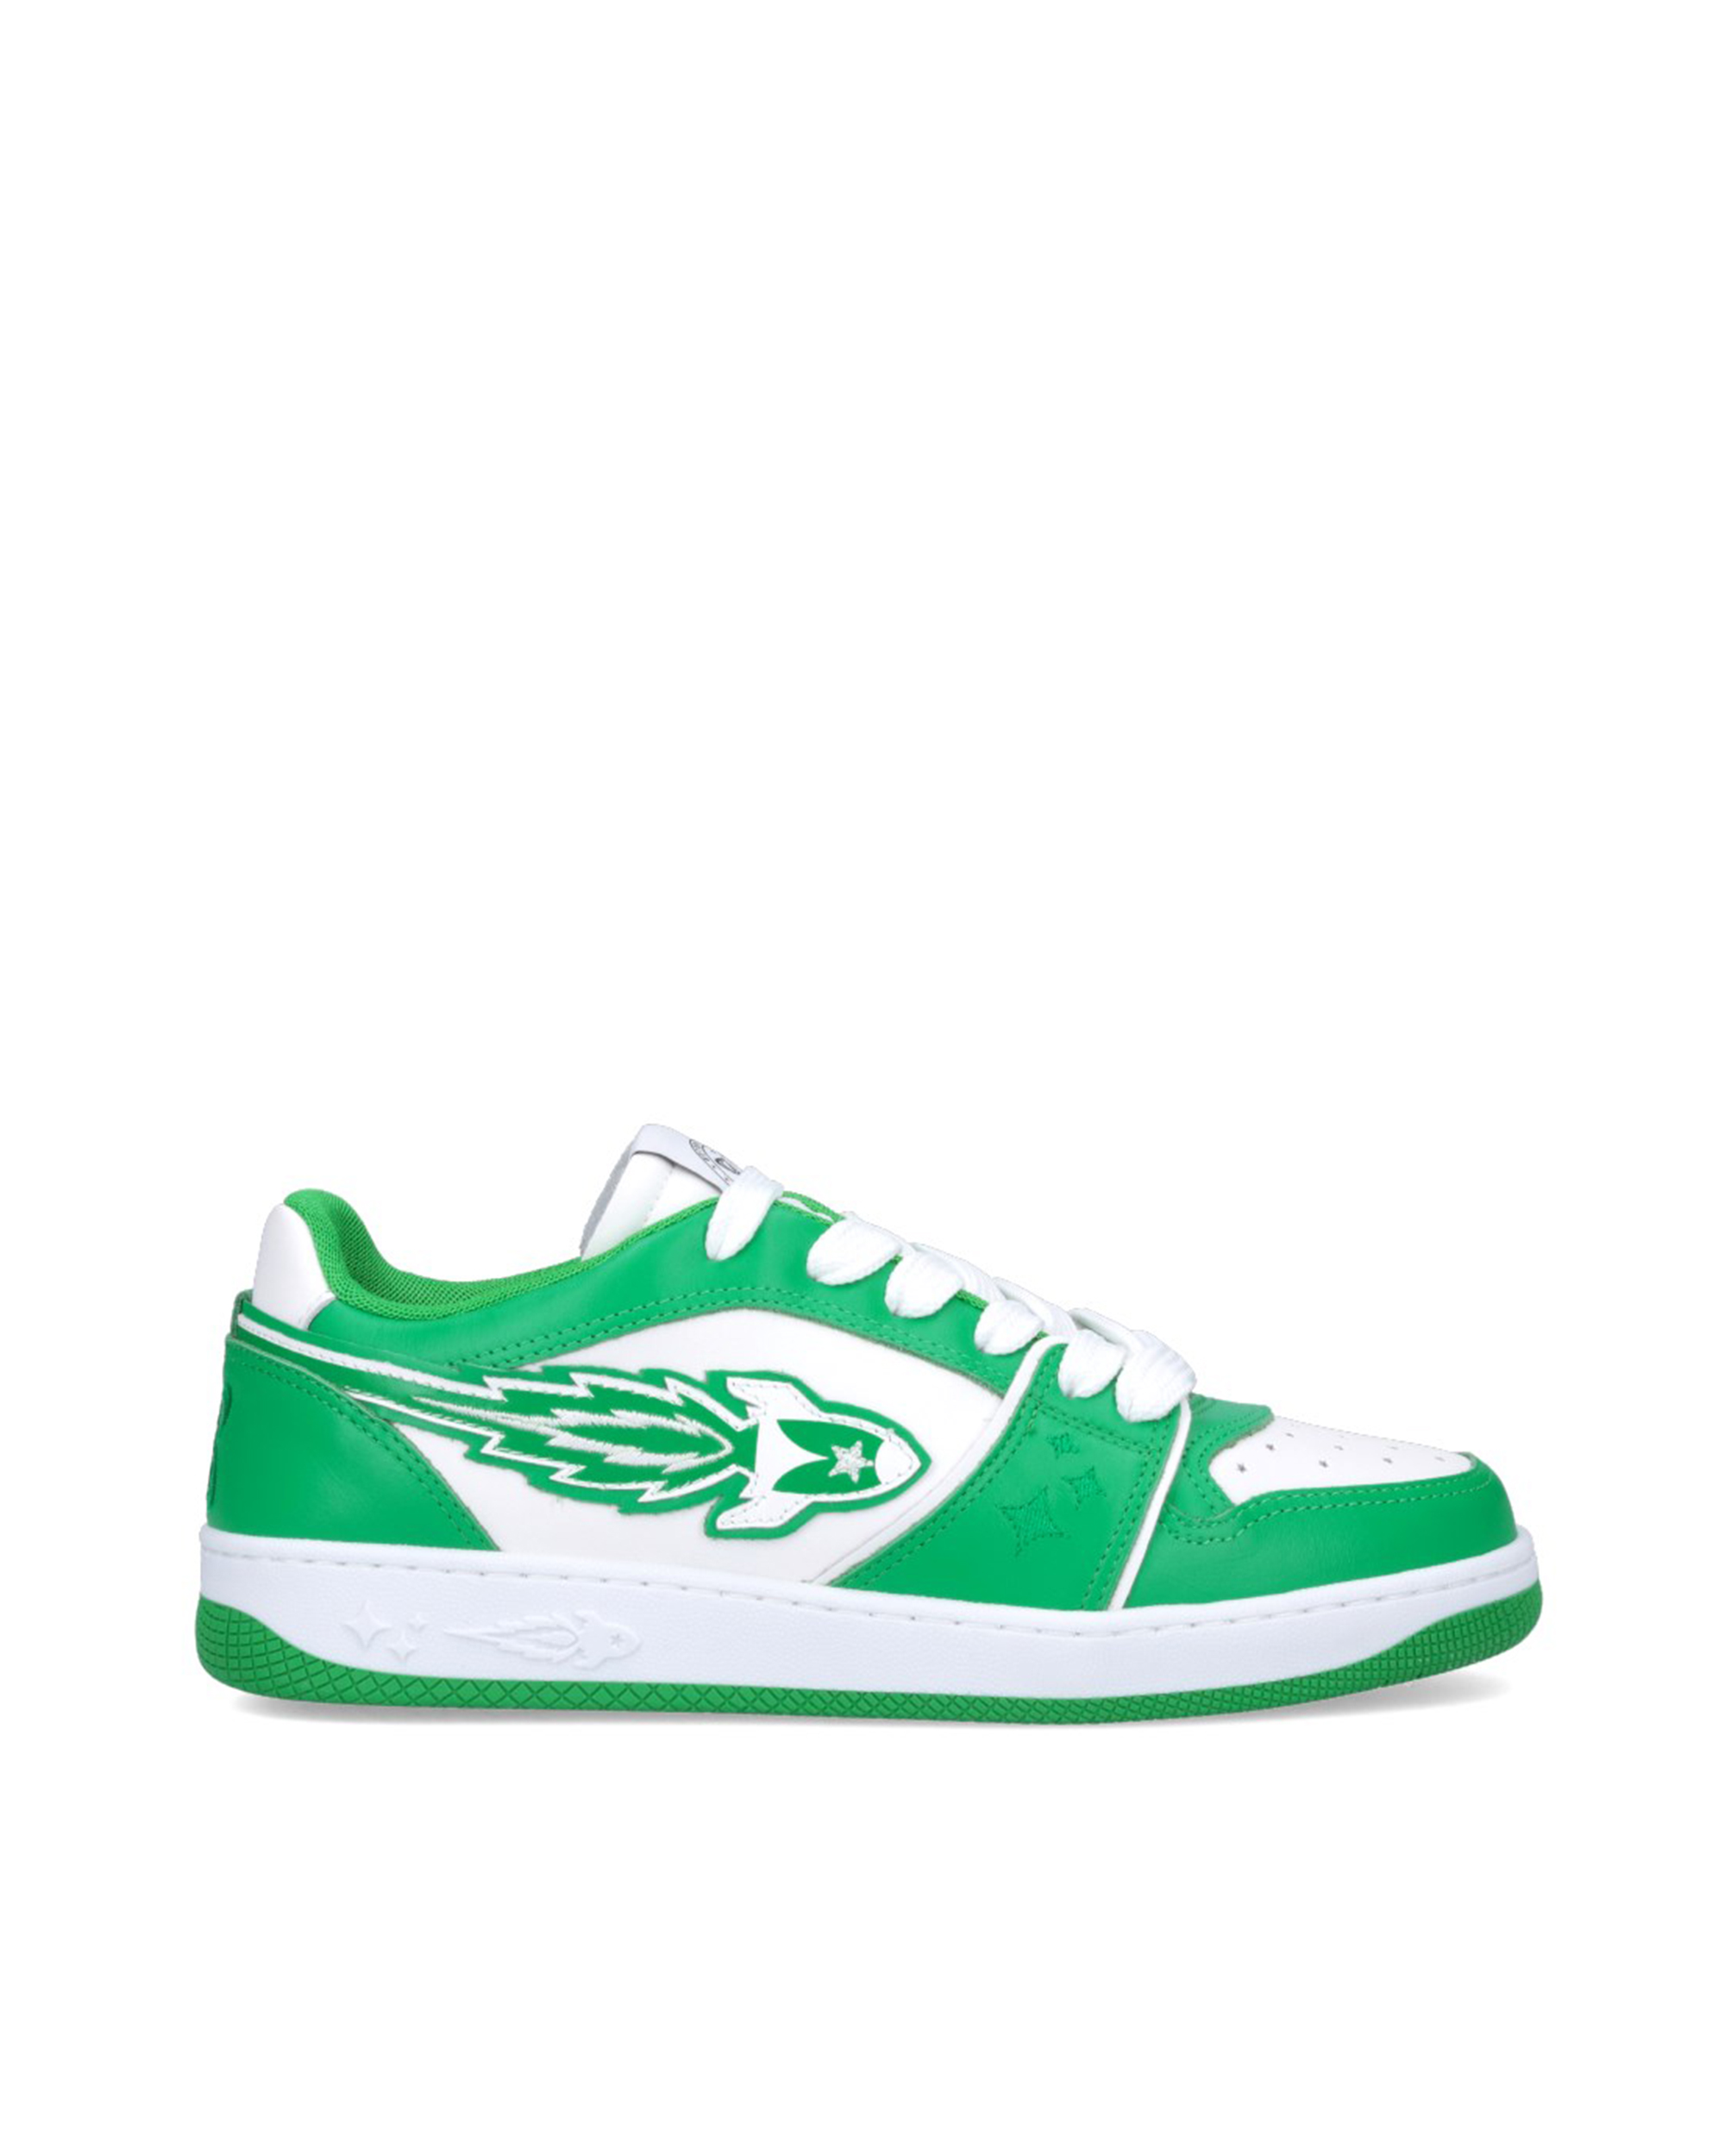 Shop Enterprise Japan Sneakers Low Egg Rocket Light Green In S3125light Green/white